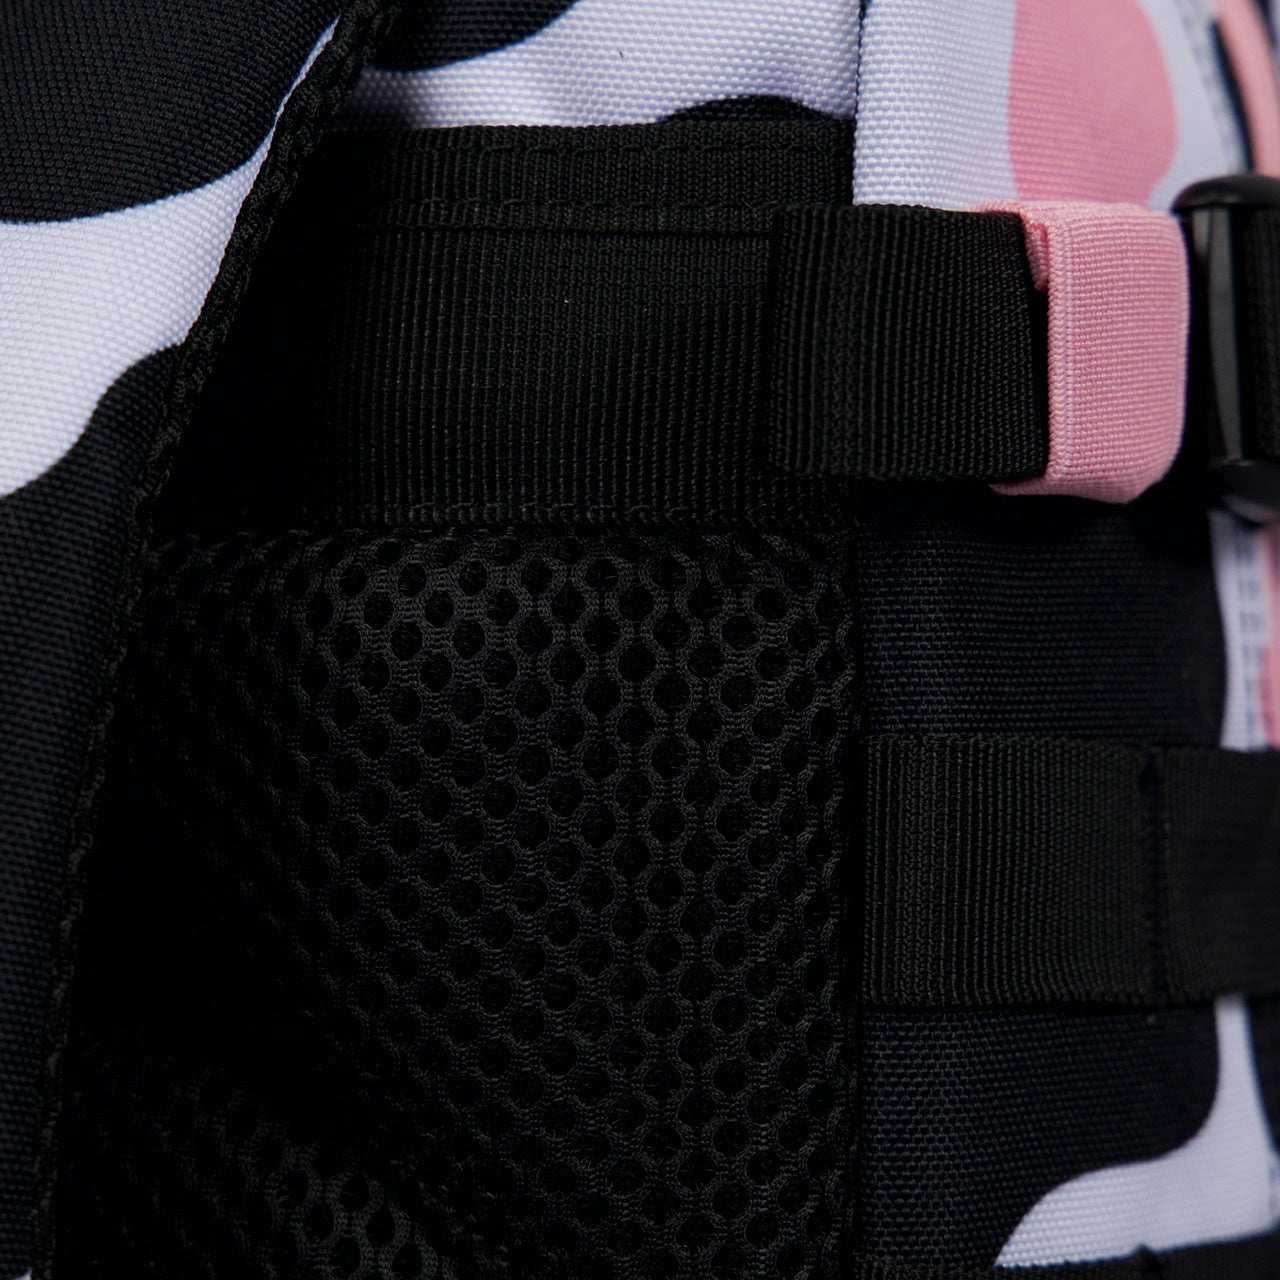 9L Backpack Mini Pink Black Cow